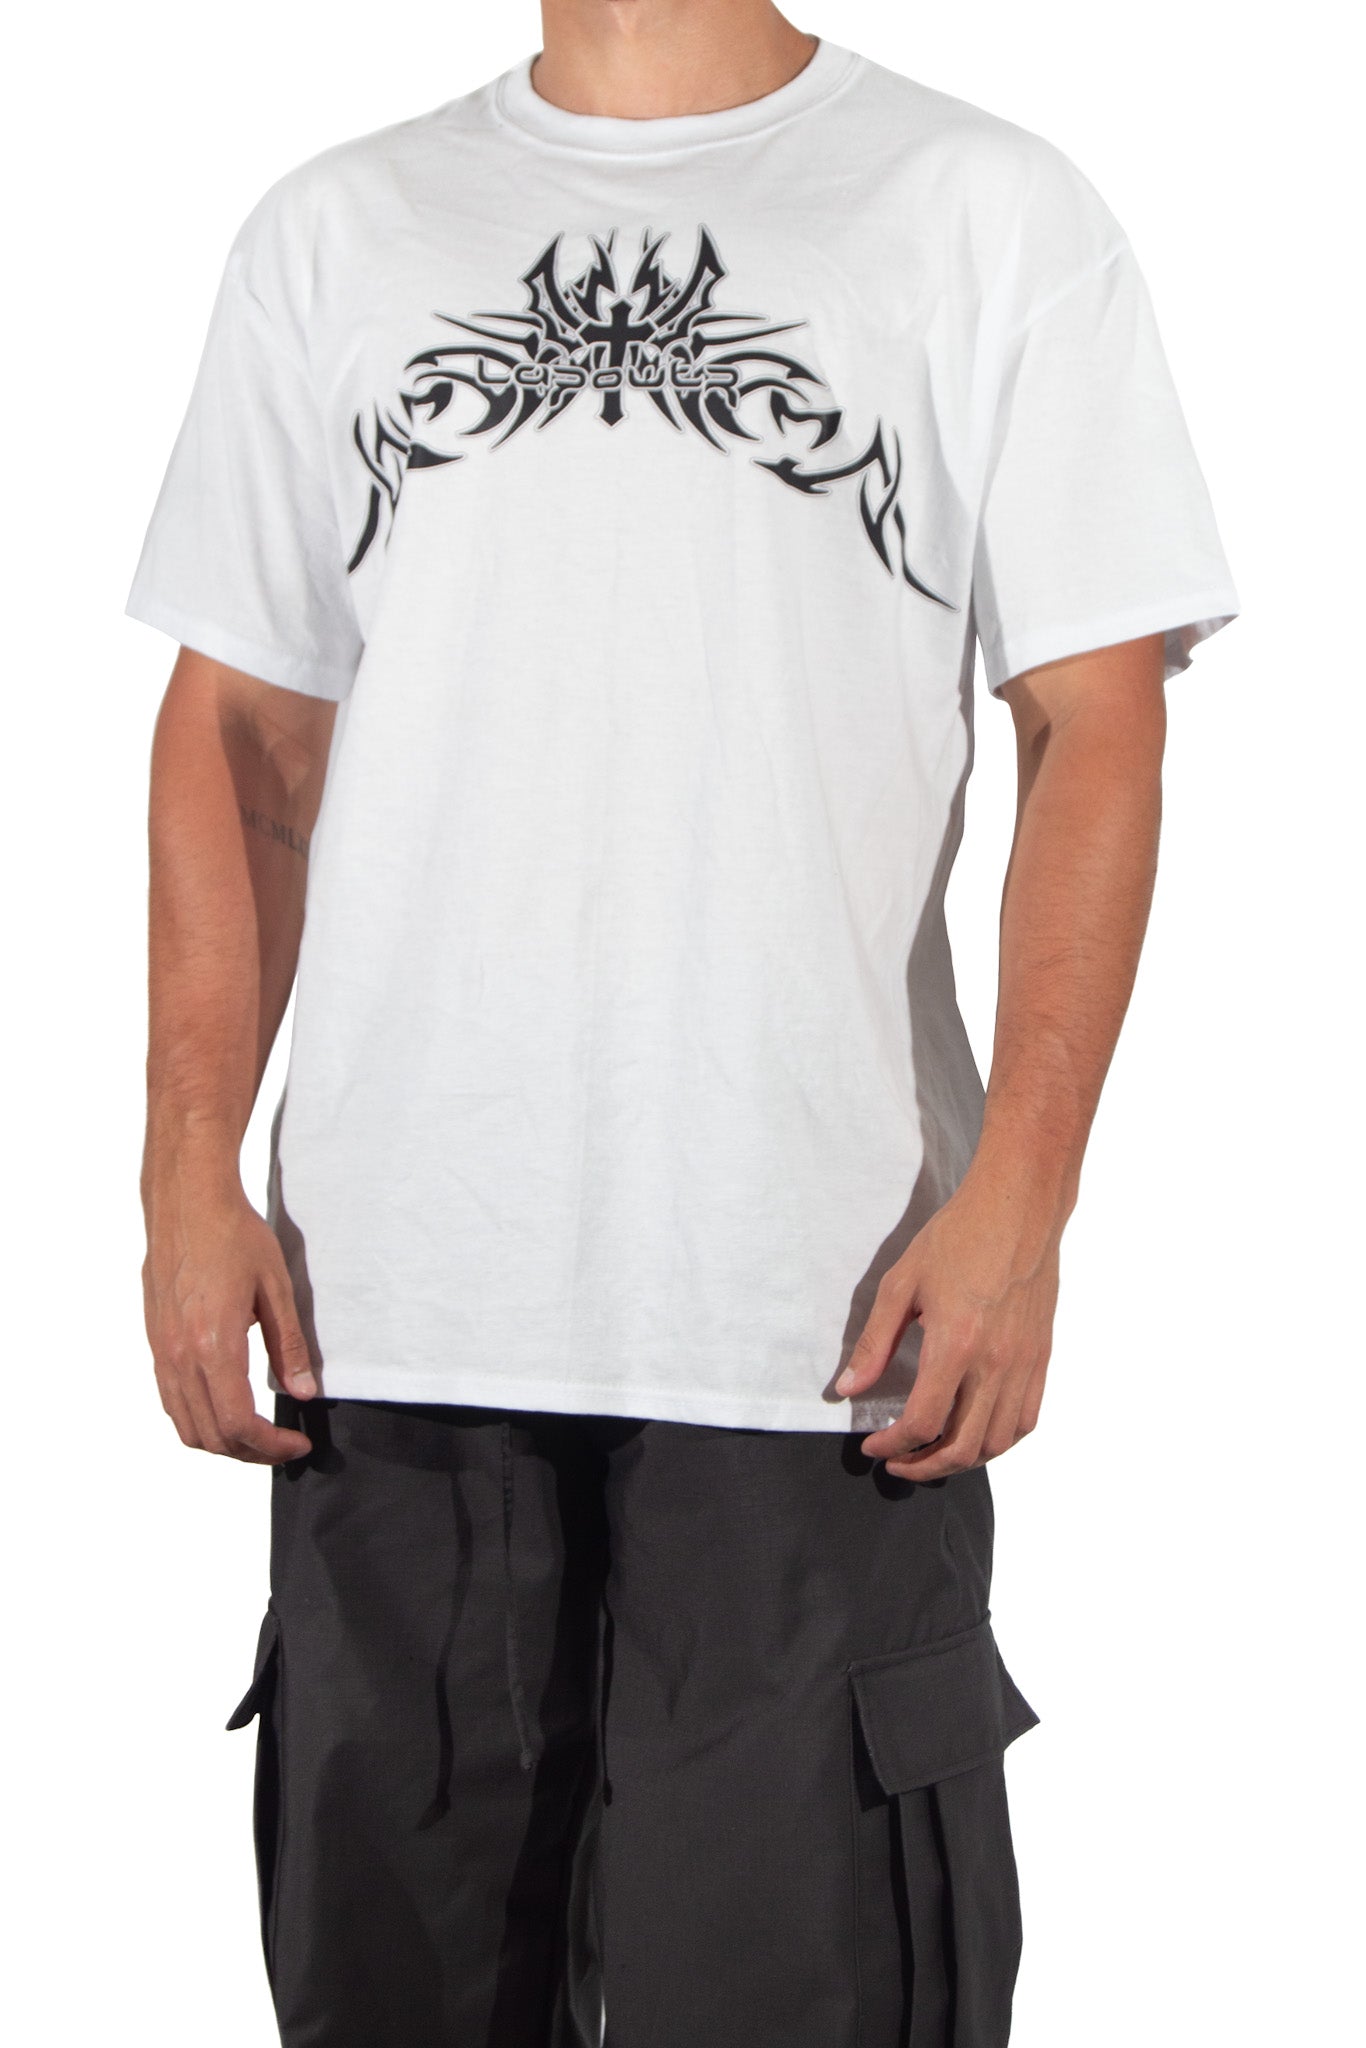 Power Tribal White T-Shirt